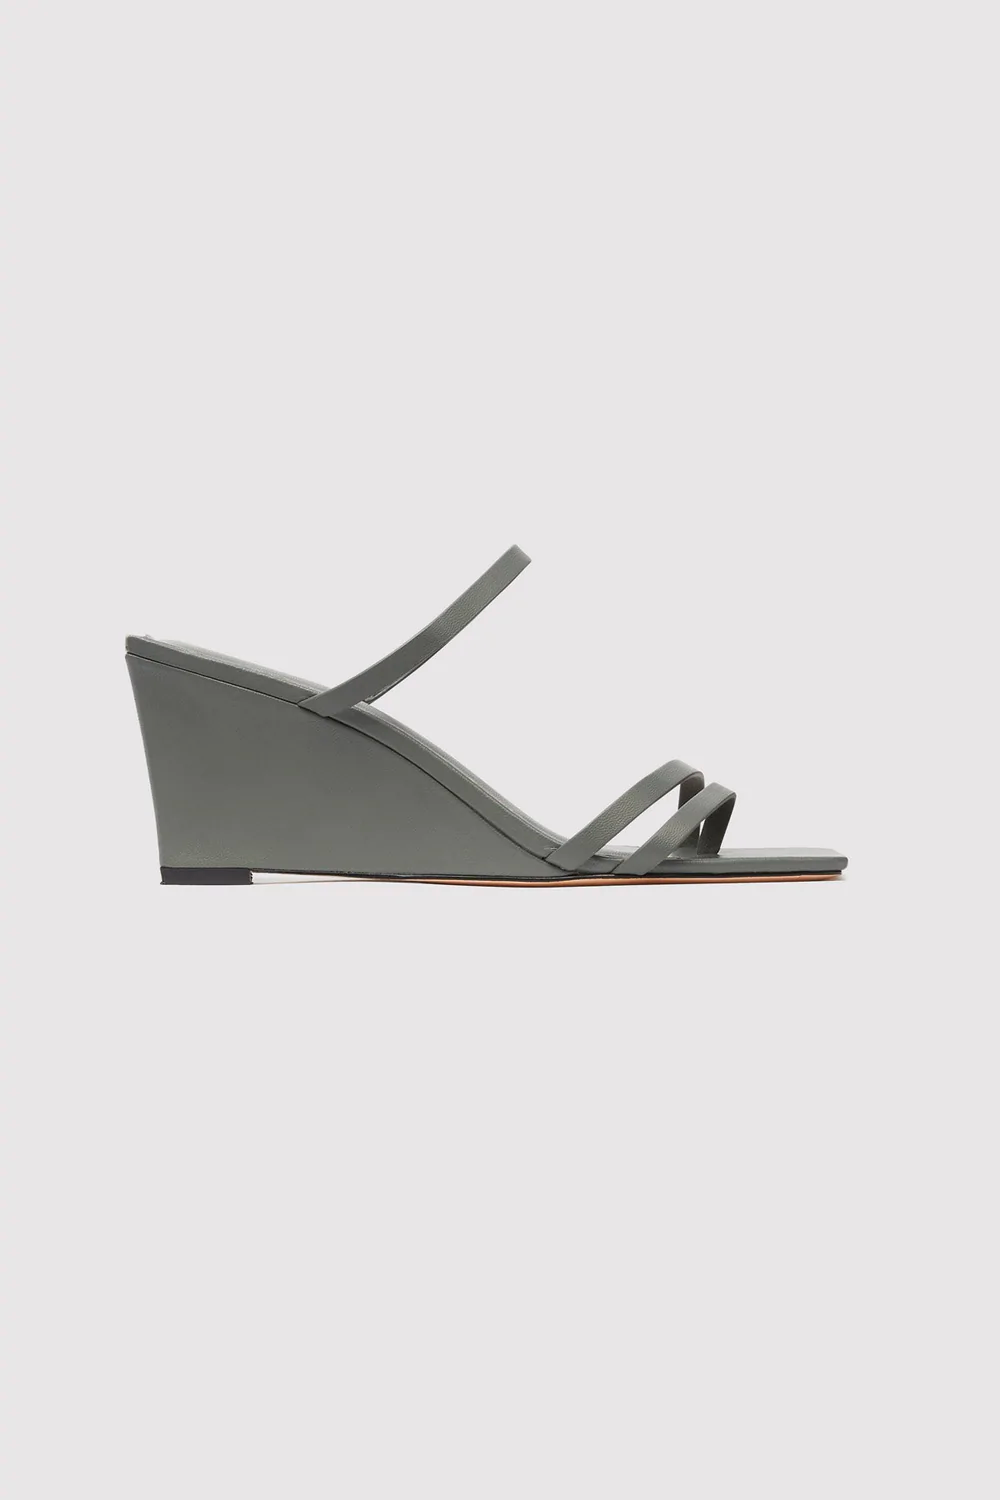 Product Image for Minimal Wedge Heel, Castor Grey